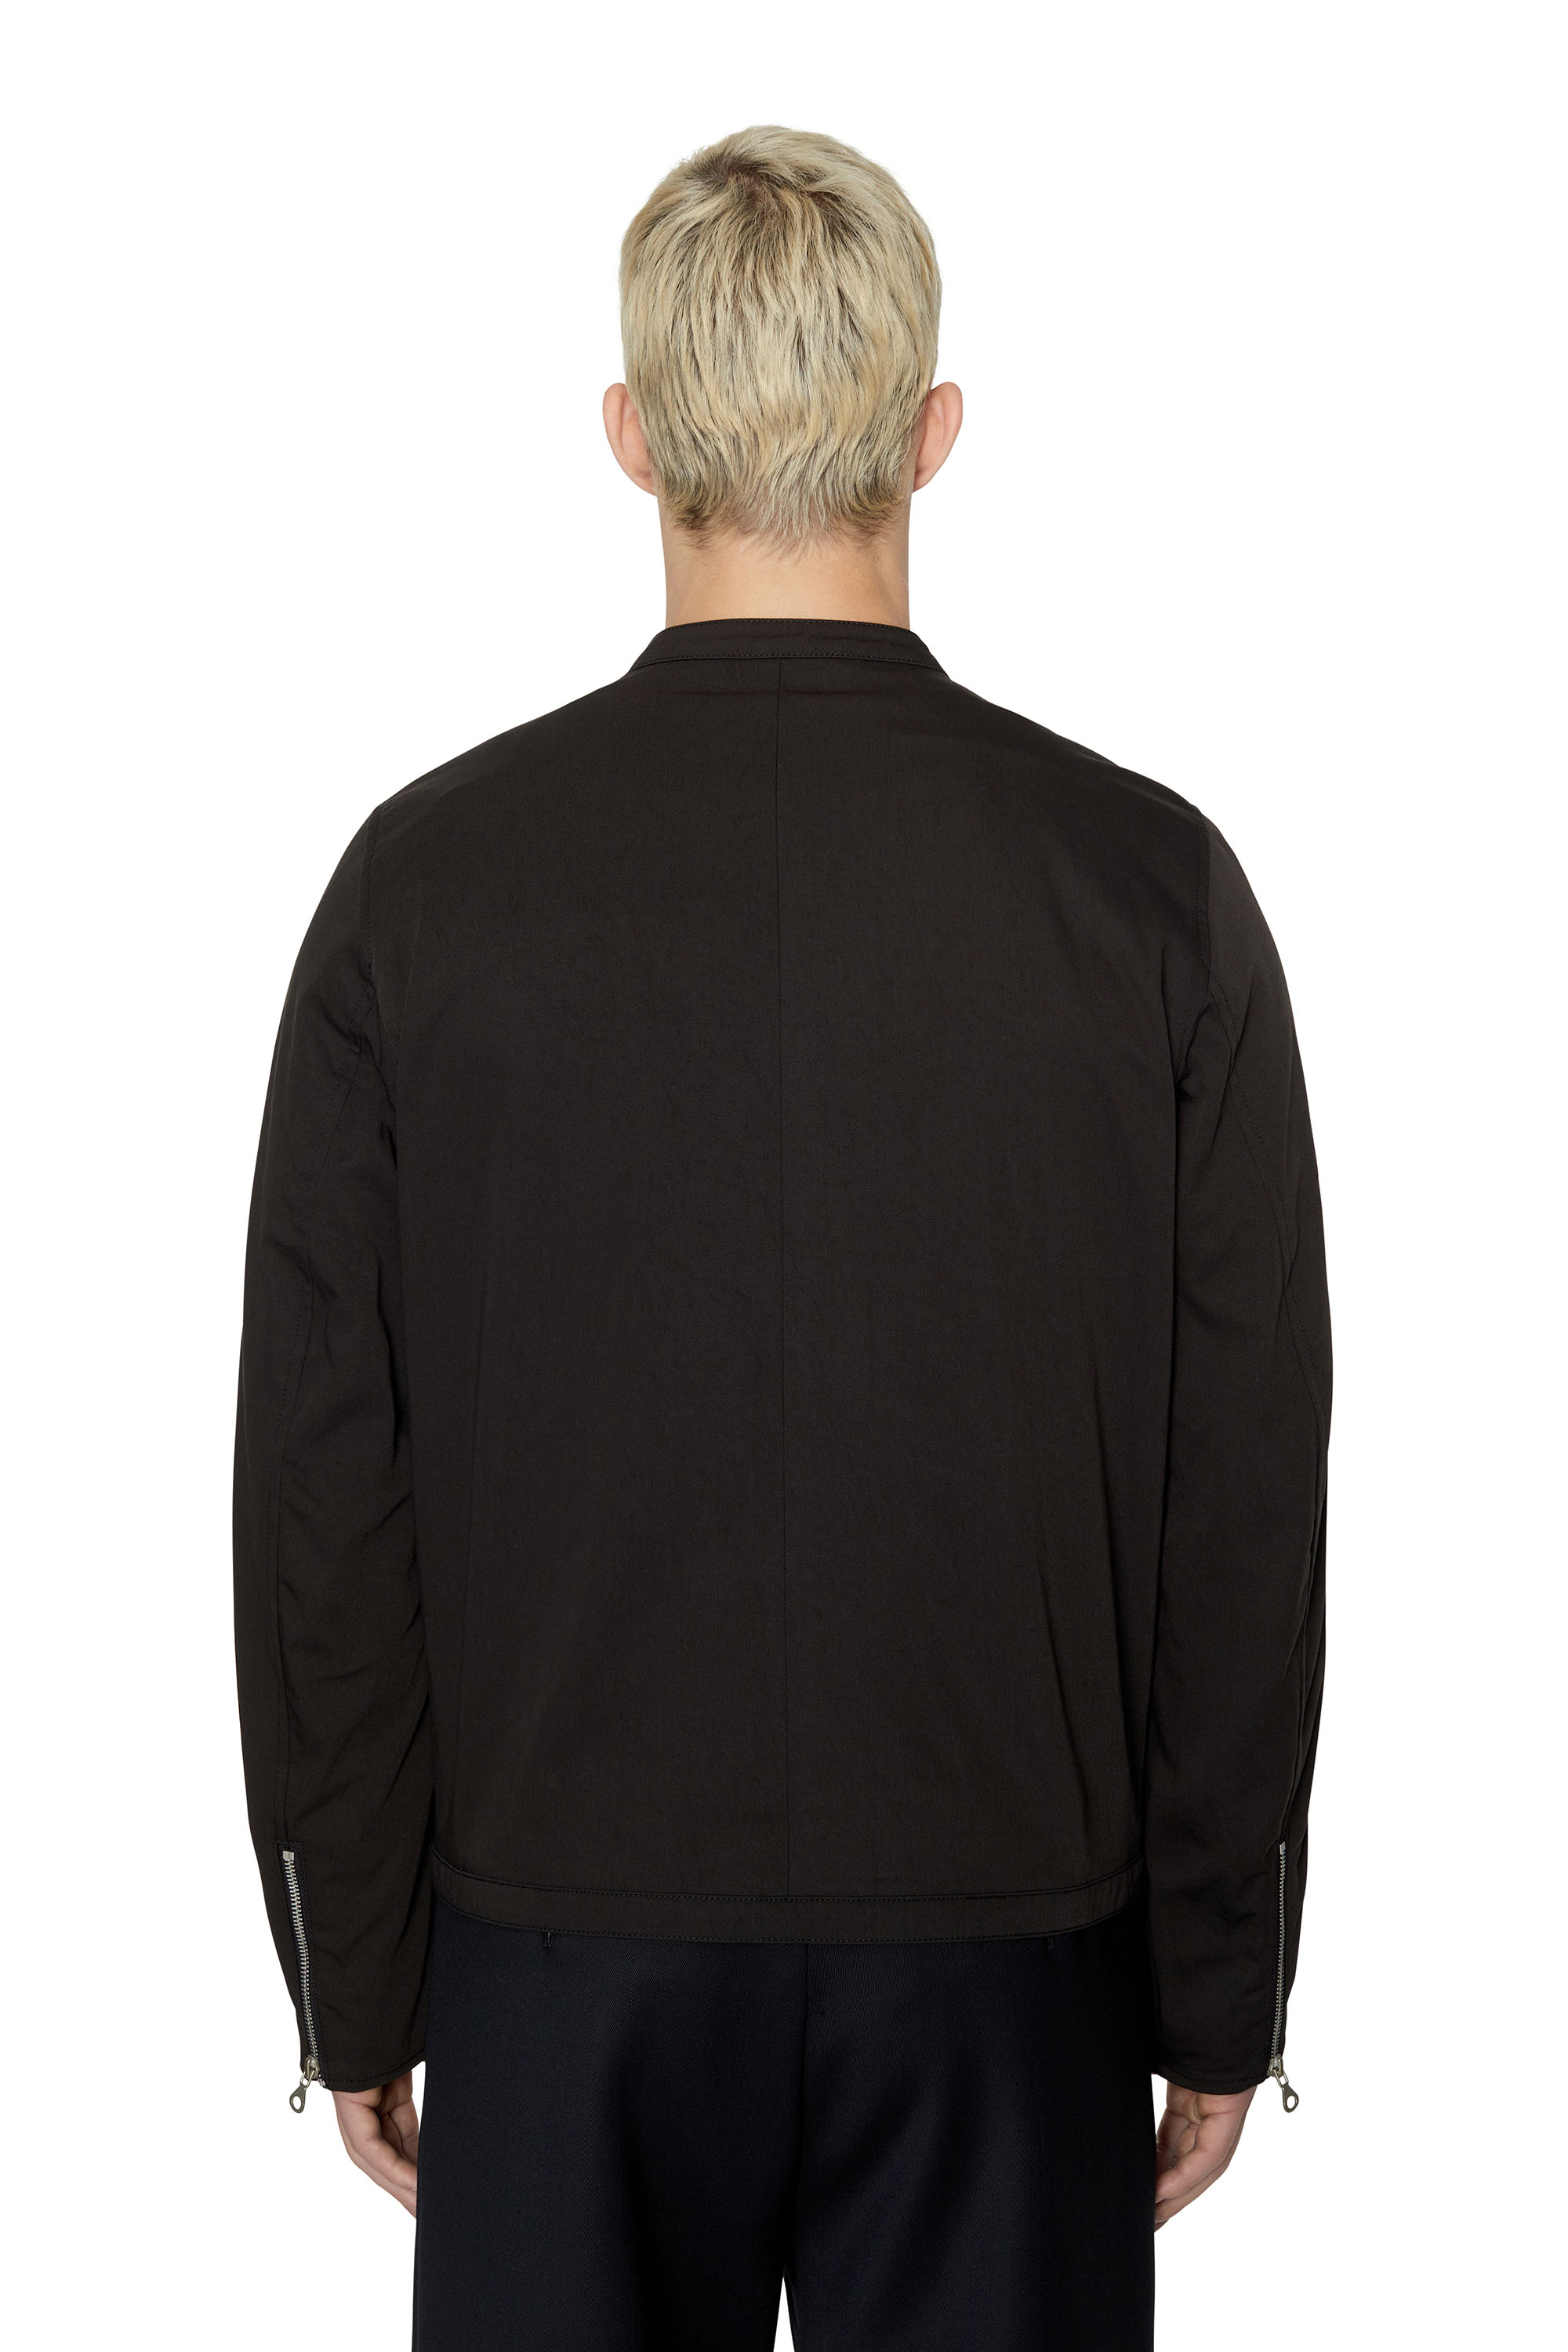 Diesel - J-GLORY-NW, Man Biker jacket in cotton-touch nylon in Black - Image 4